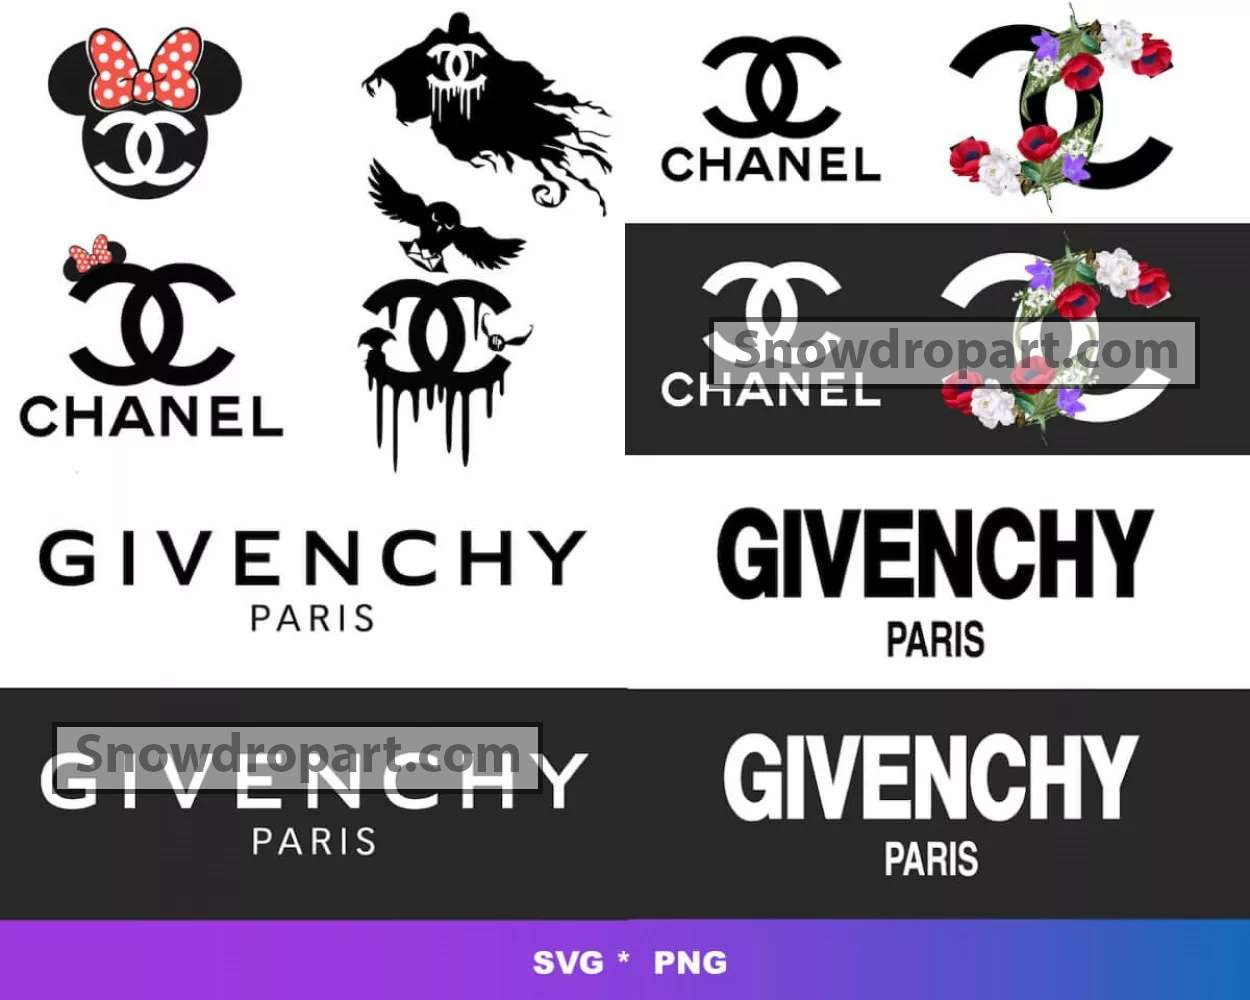 Fashion Brand Bundle Svg, Gucci, Chanel, Lv Logo Svg , Brand Svg File Cut  Digital Download,Fashion brand logo svg